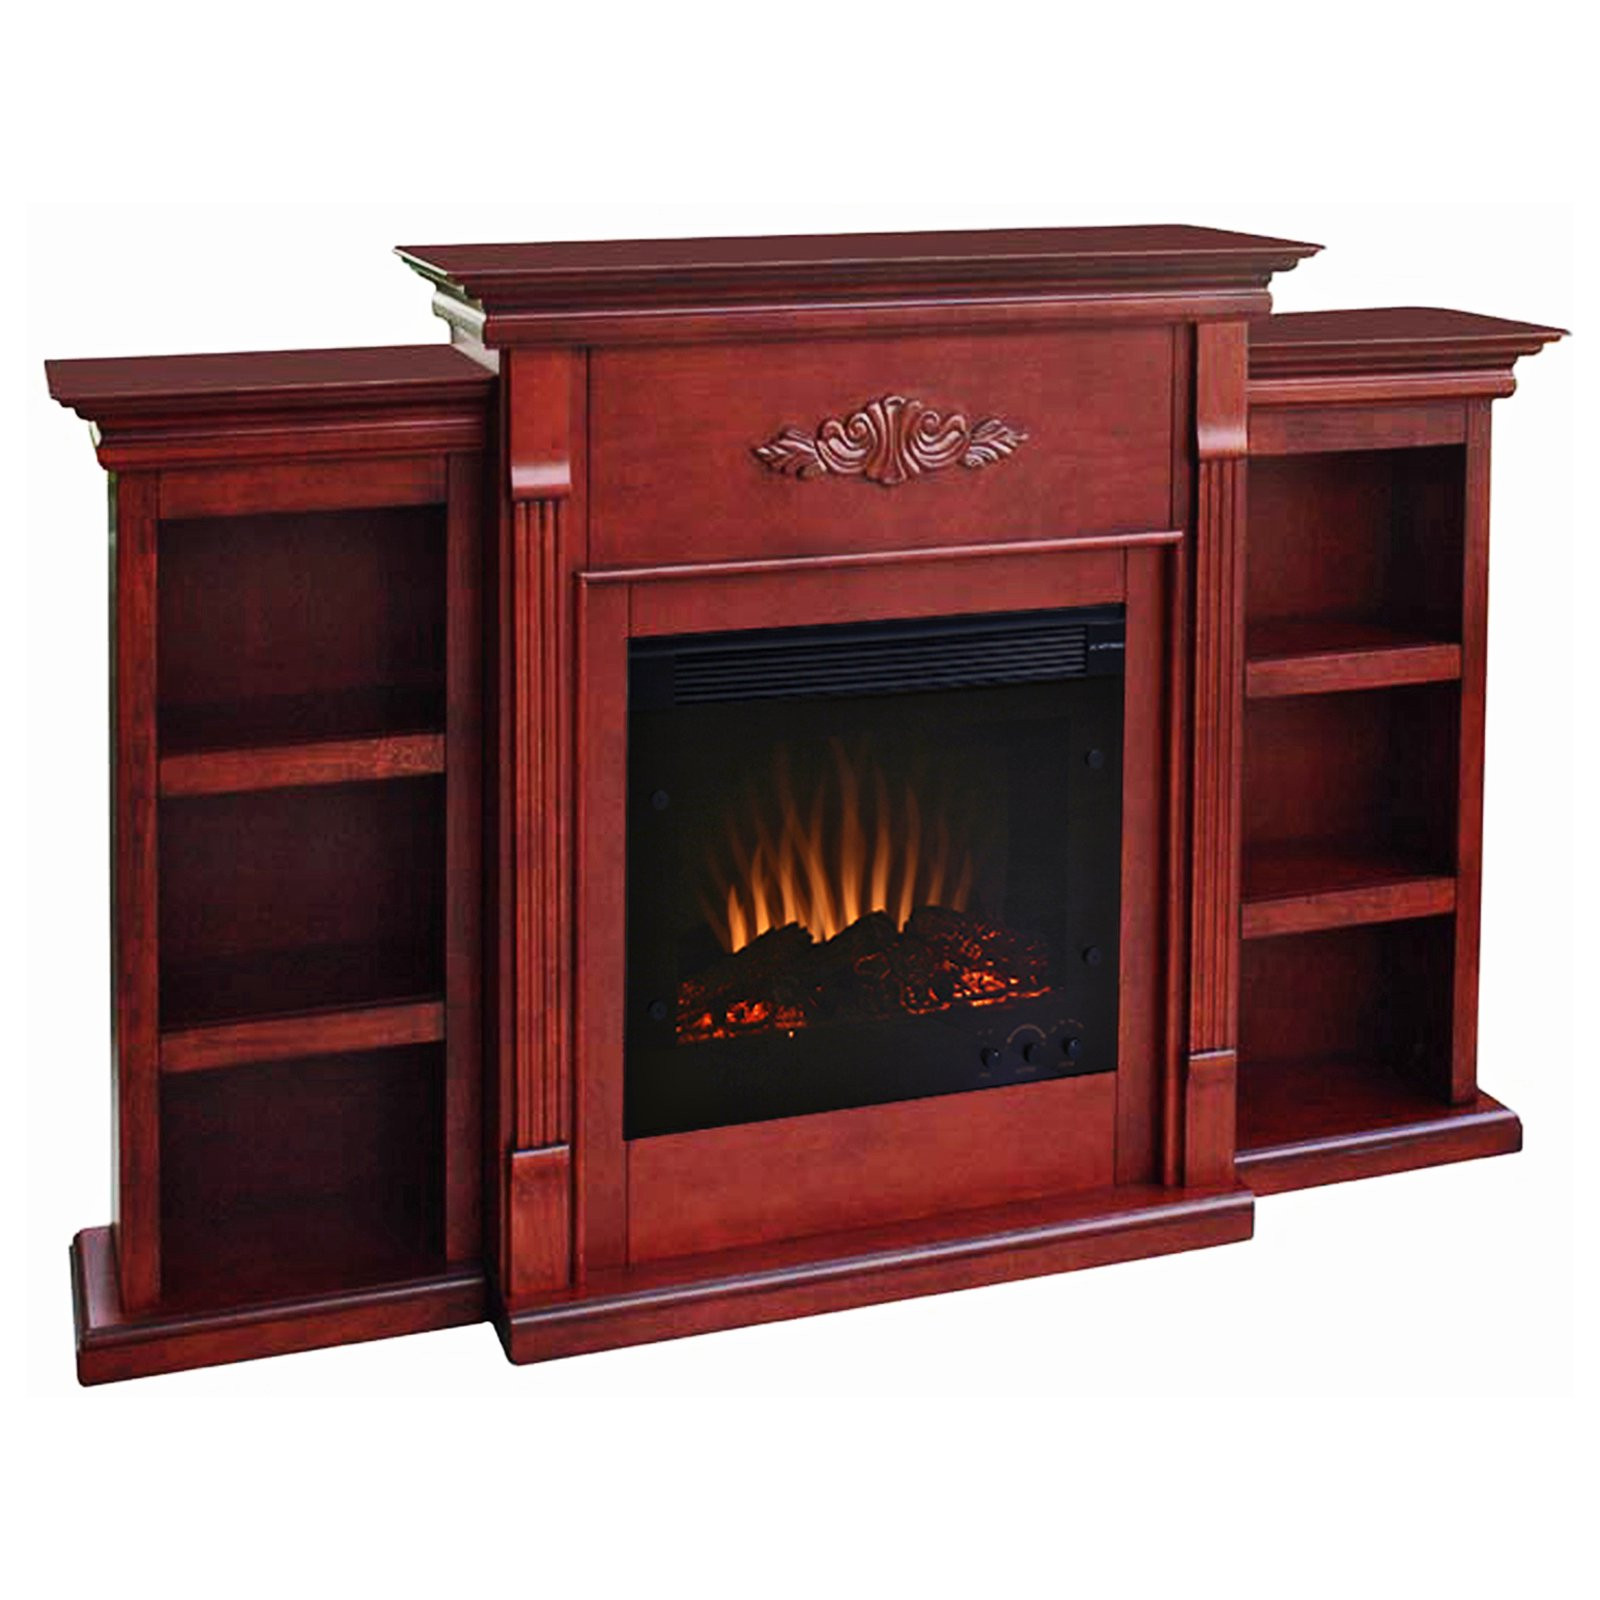 Electric Fireplace Bookcase
 Southern Enterprises Tennyson Mahogany Electric Fireplace